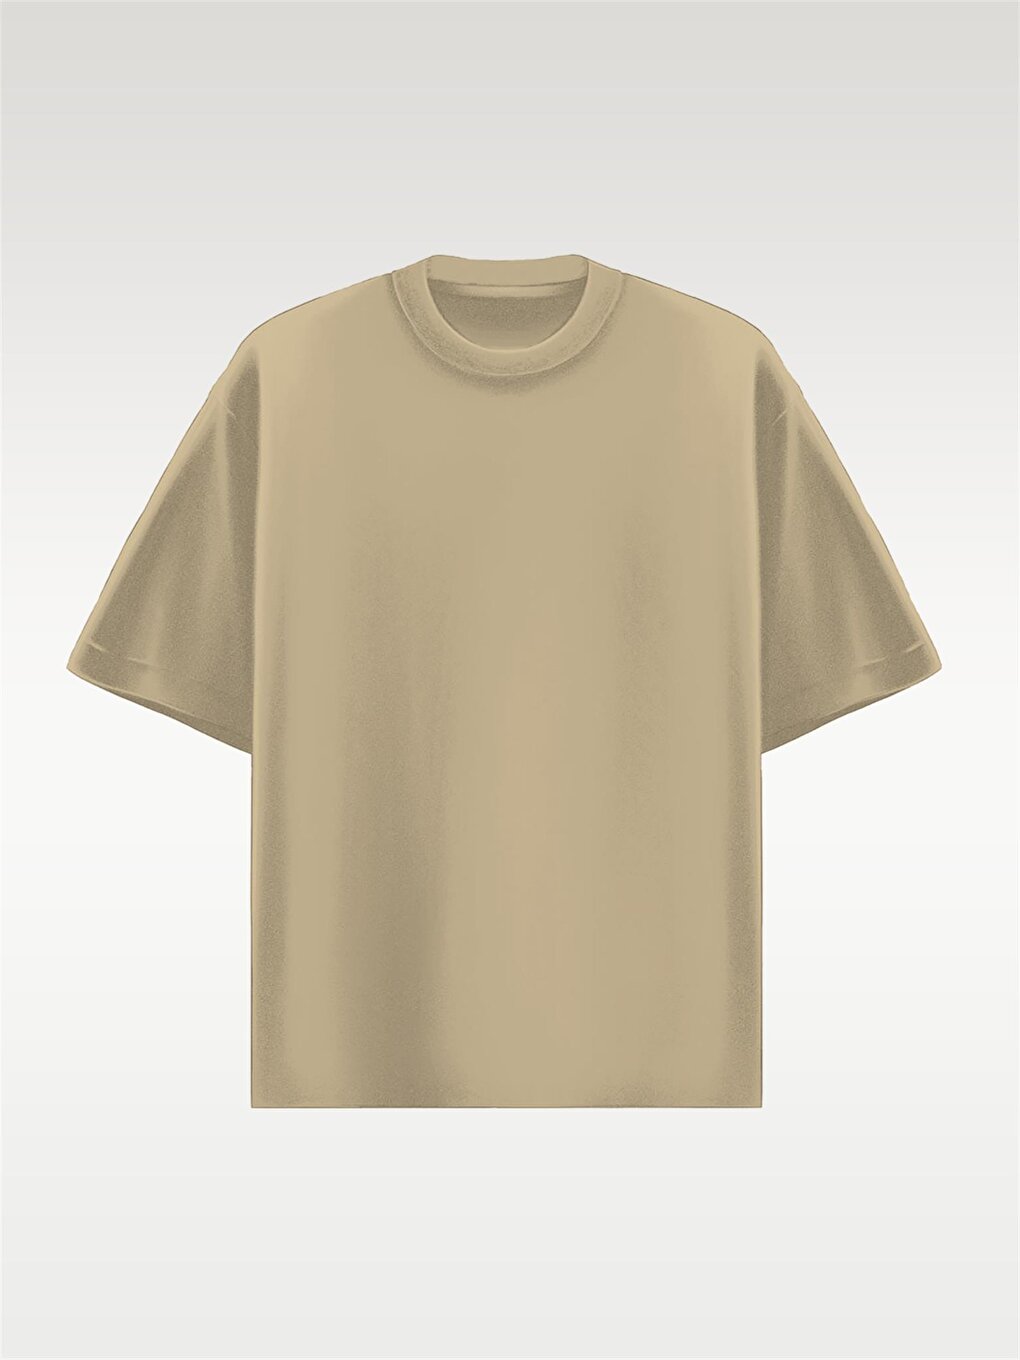 Базовая футболка Oversize Бежевая ablukaonline цена и фото